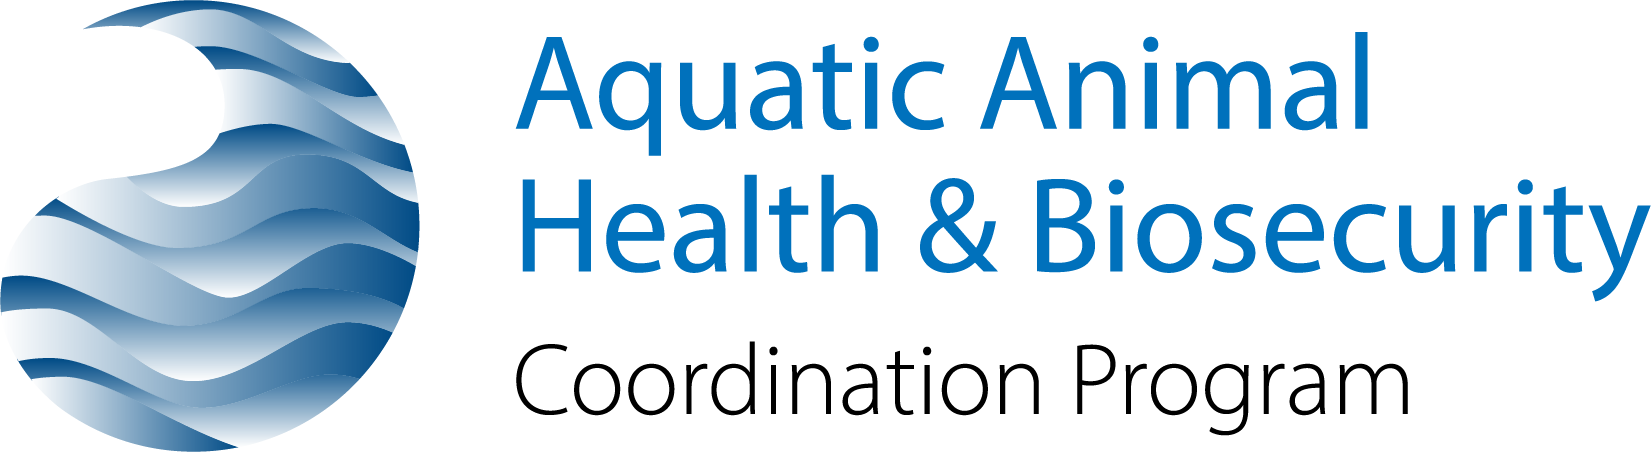 Aquatic Animal Health and Biosecurity Coordination Program